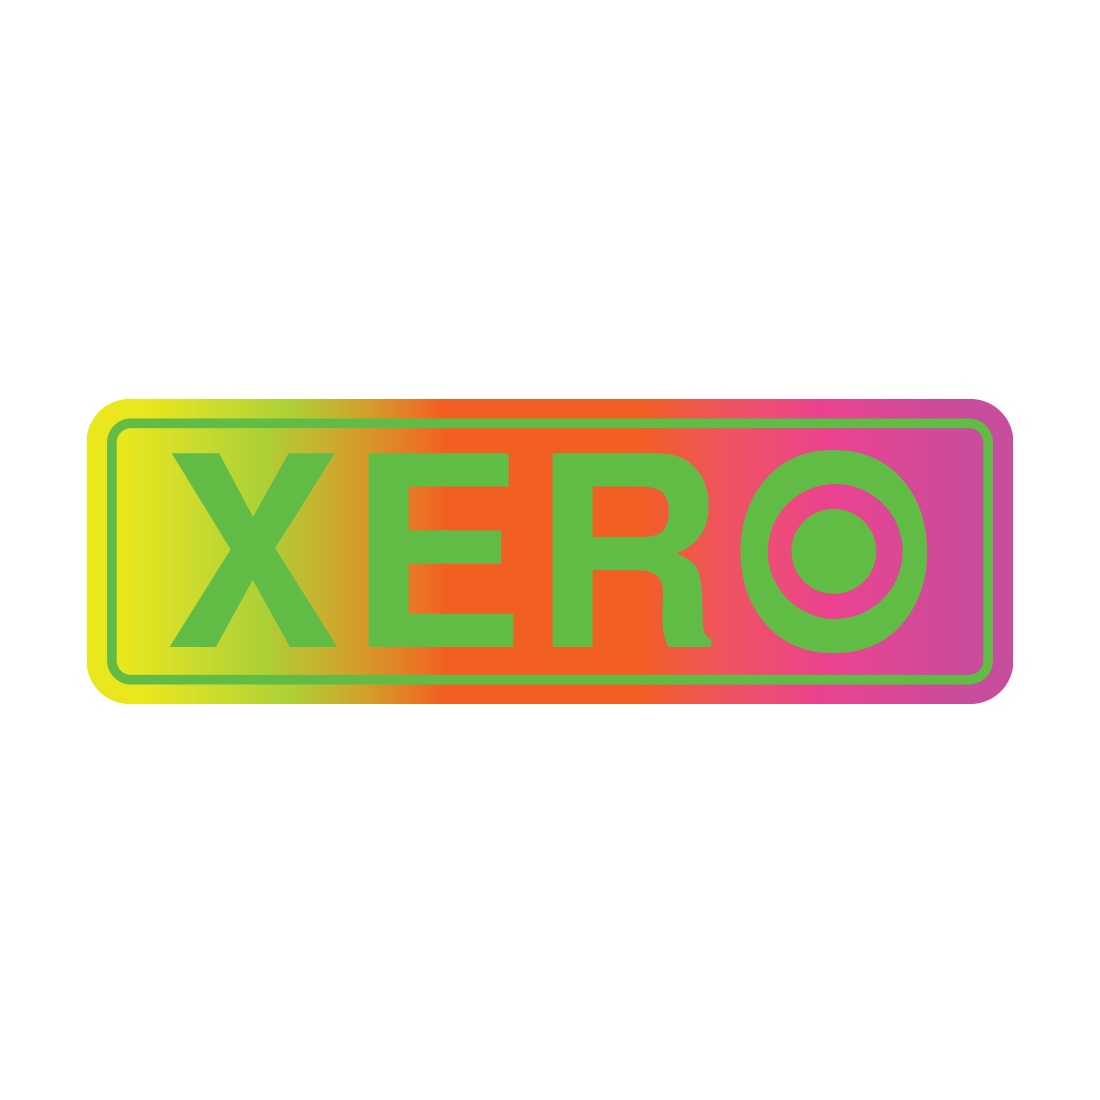 XERO Sticker - South Beach View